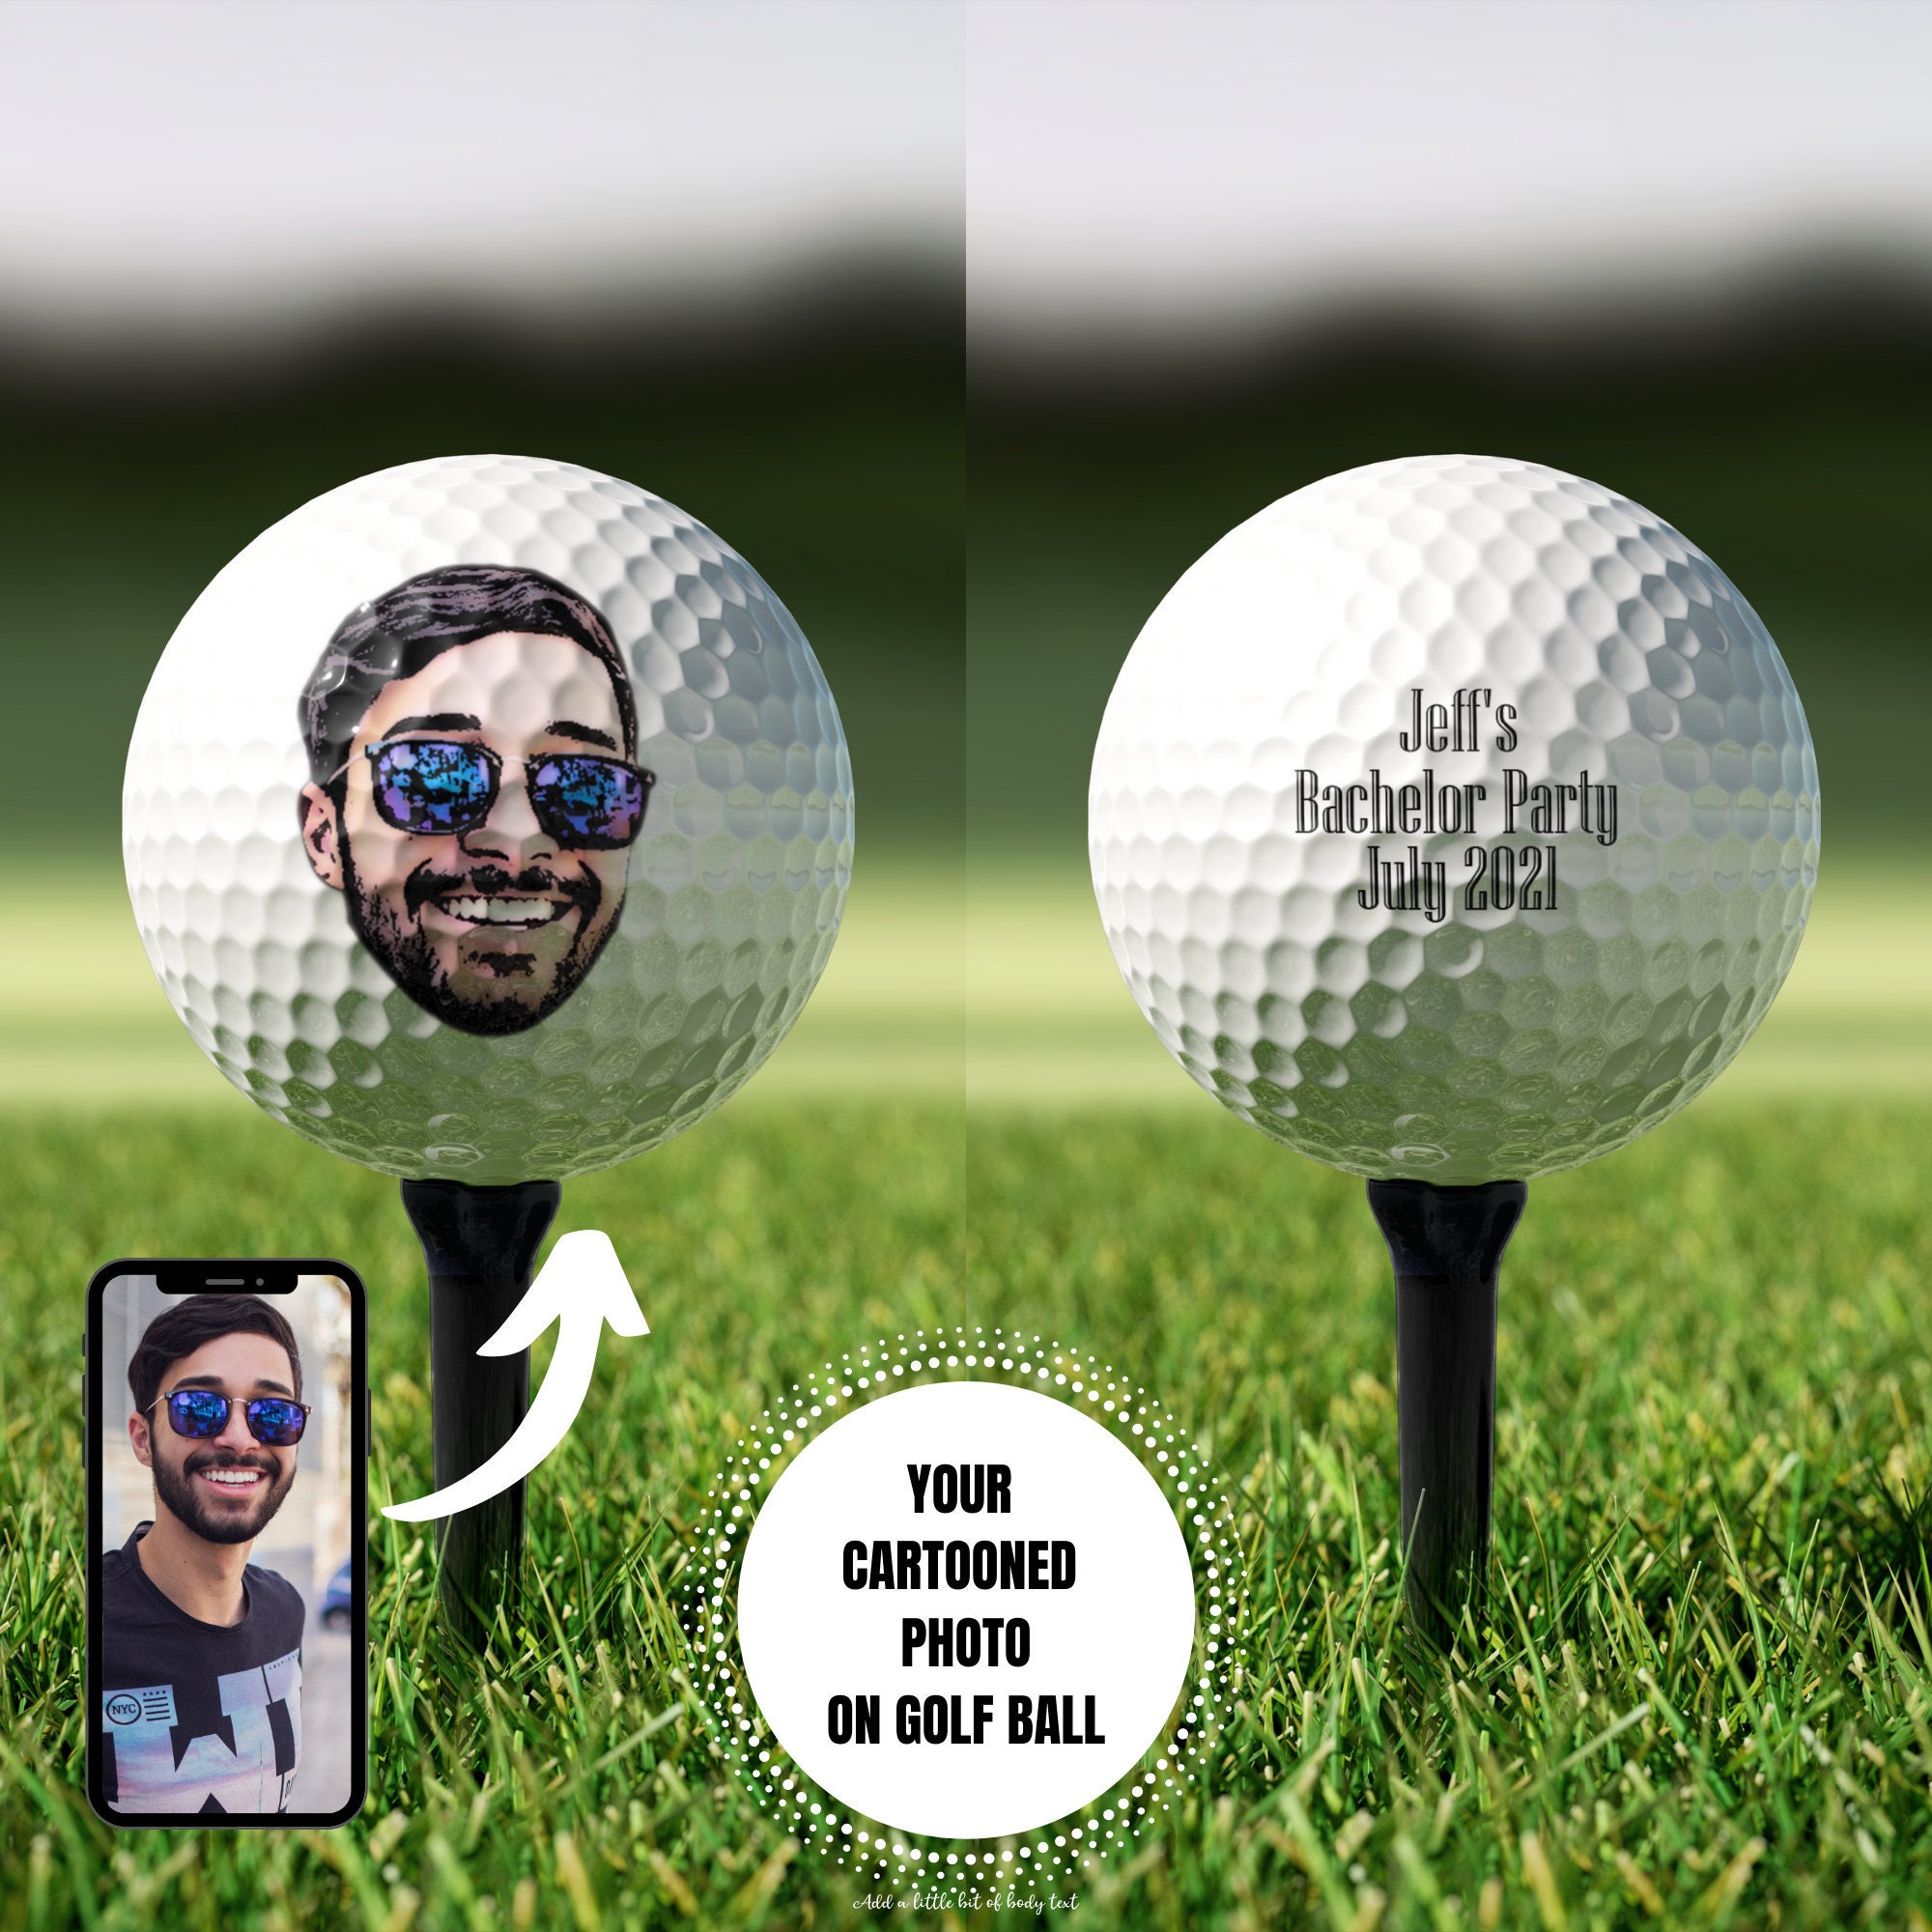 Funny Personalized Golf Balls, Ball Sack Gift, Custom Gift for Golfer